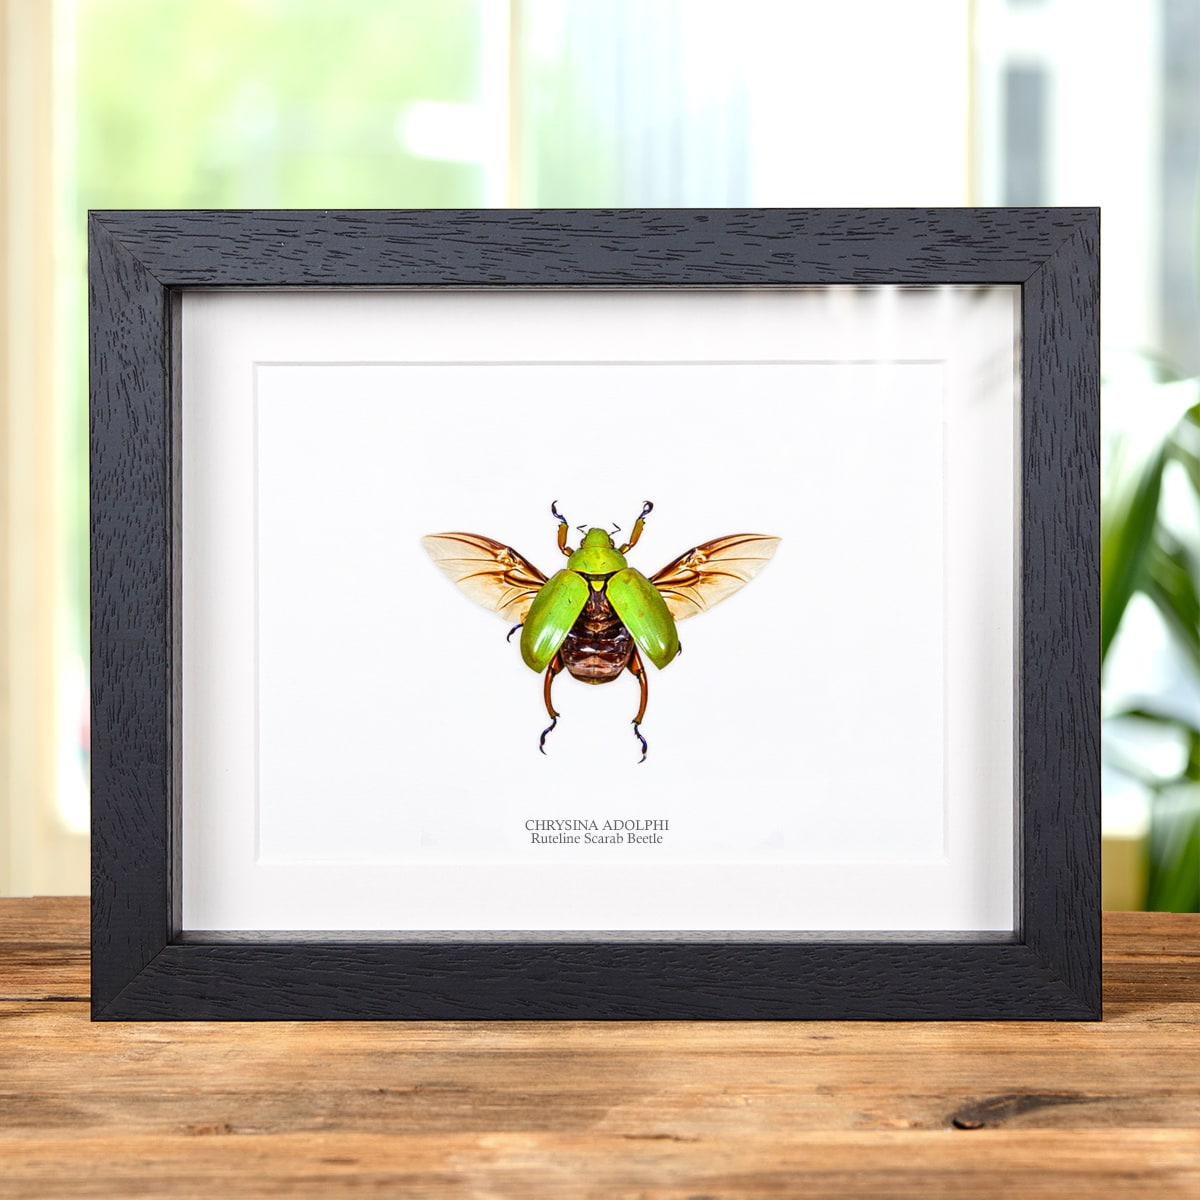 Minibeast Ruteline Scarab Beetle in Box Frame (Chrysina adolphi)